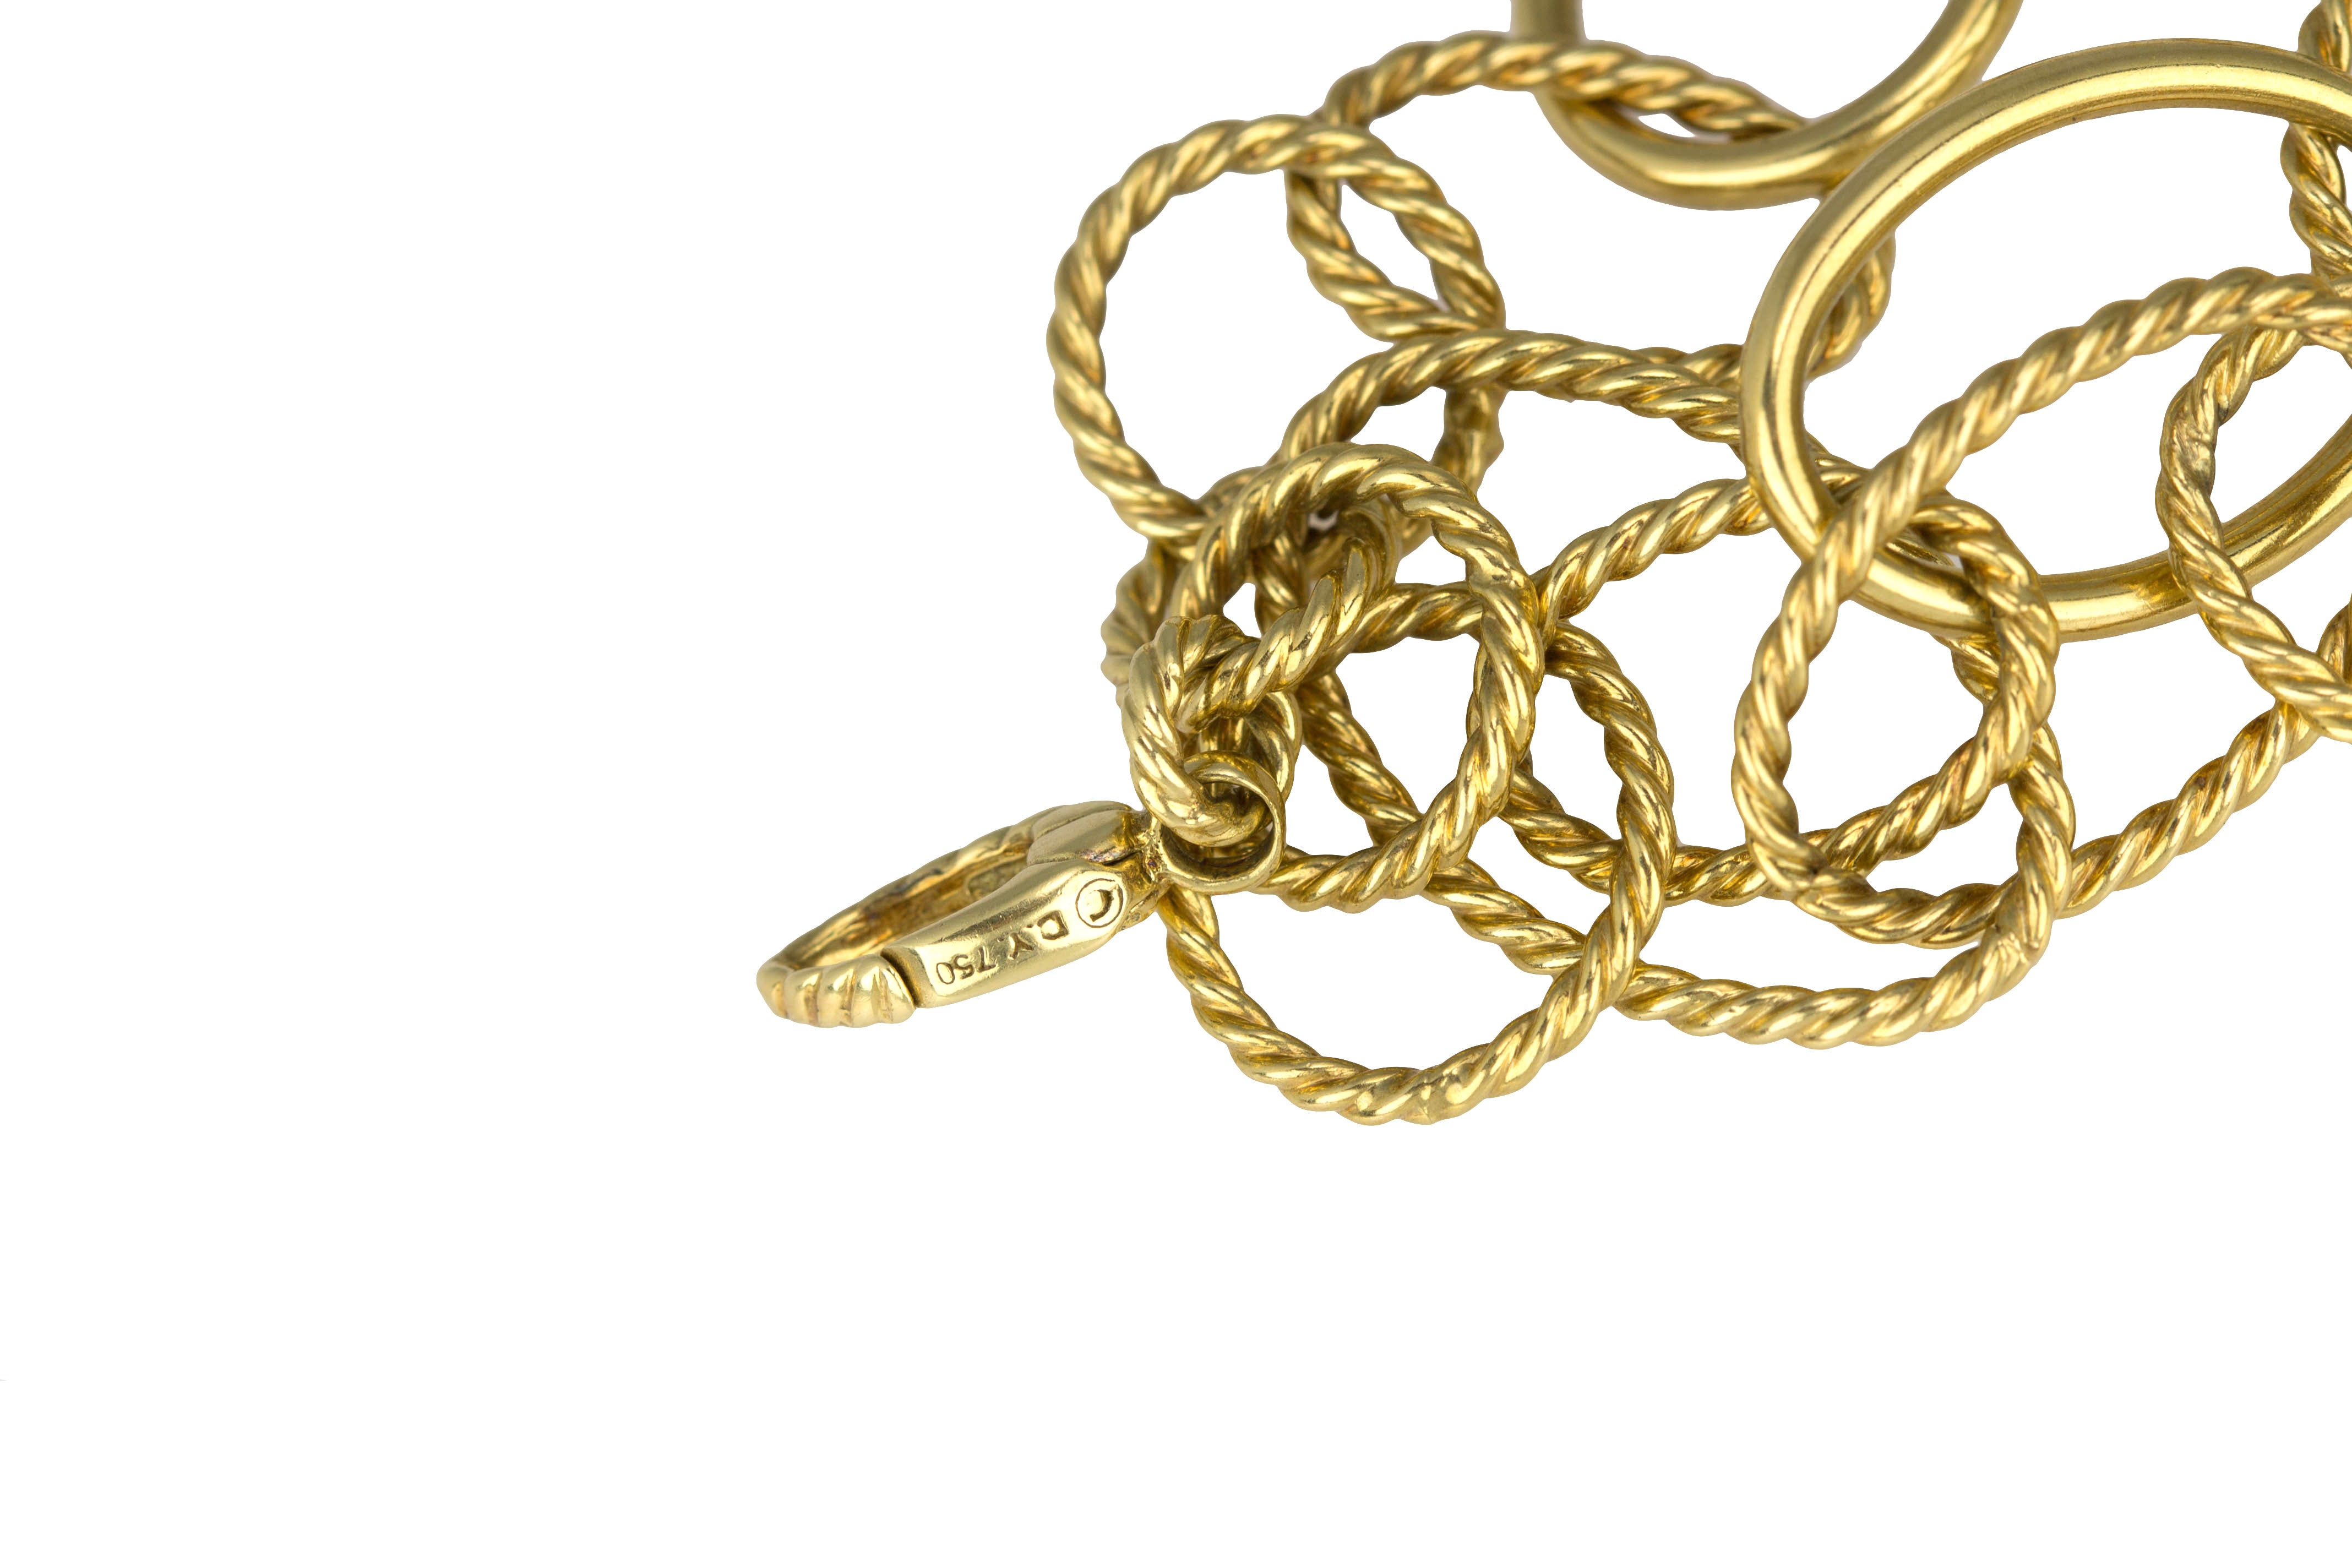 Yellow Gold Triple Strand Rope Bracelet